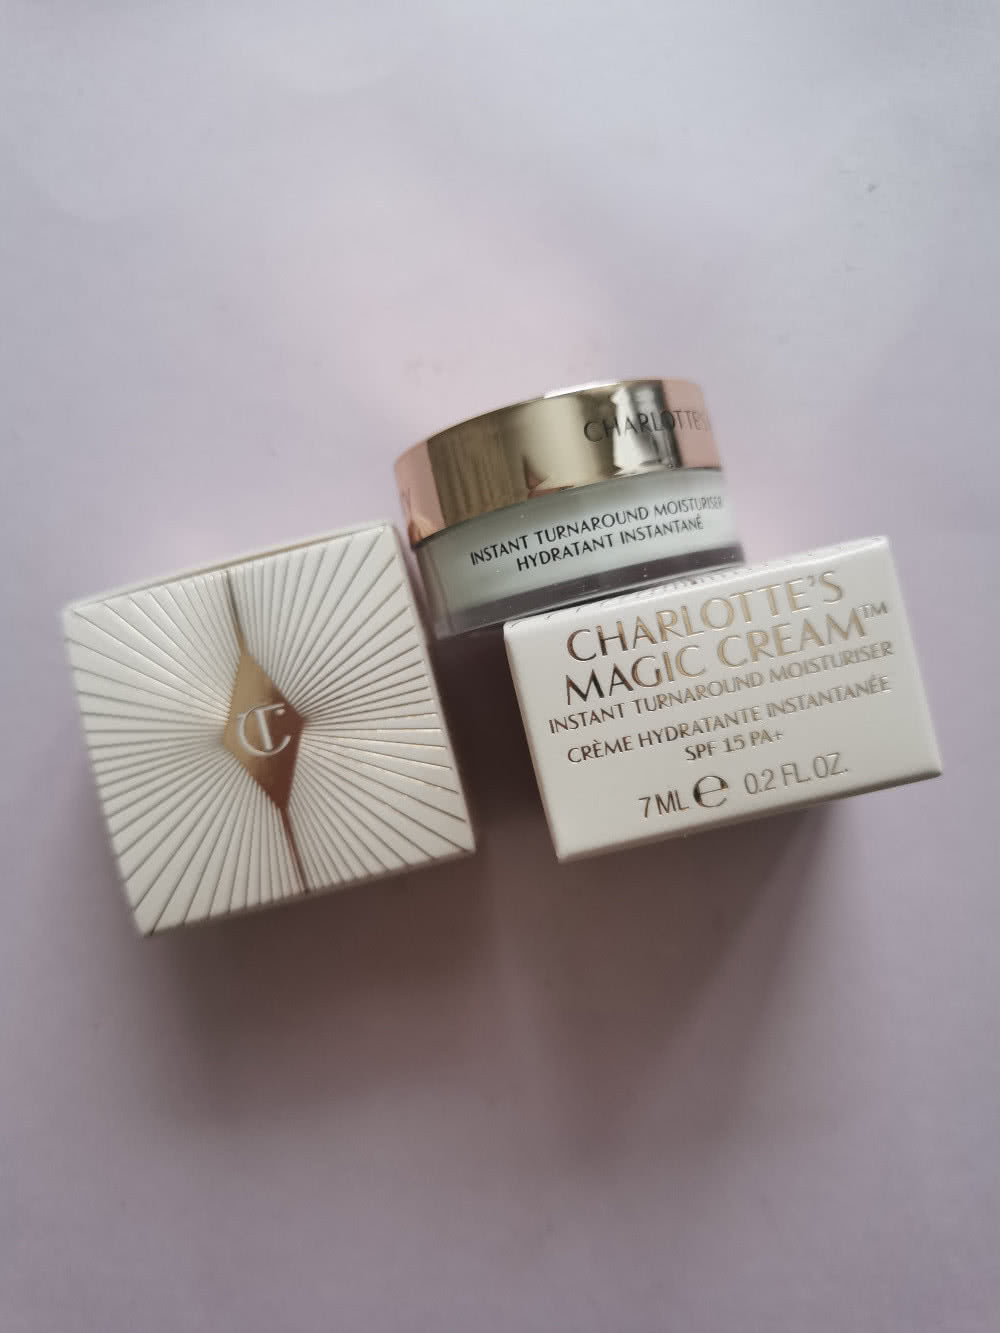 Charlotte Tilbury Deluxe Charlotte’s Magic Cream Moisturiser/7 мл Увлажняющий крем с SPF 15 для сияния кожи